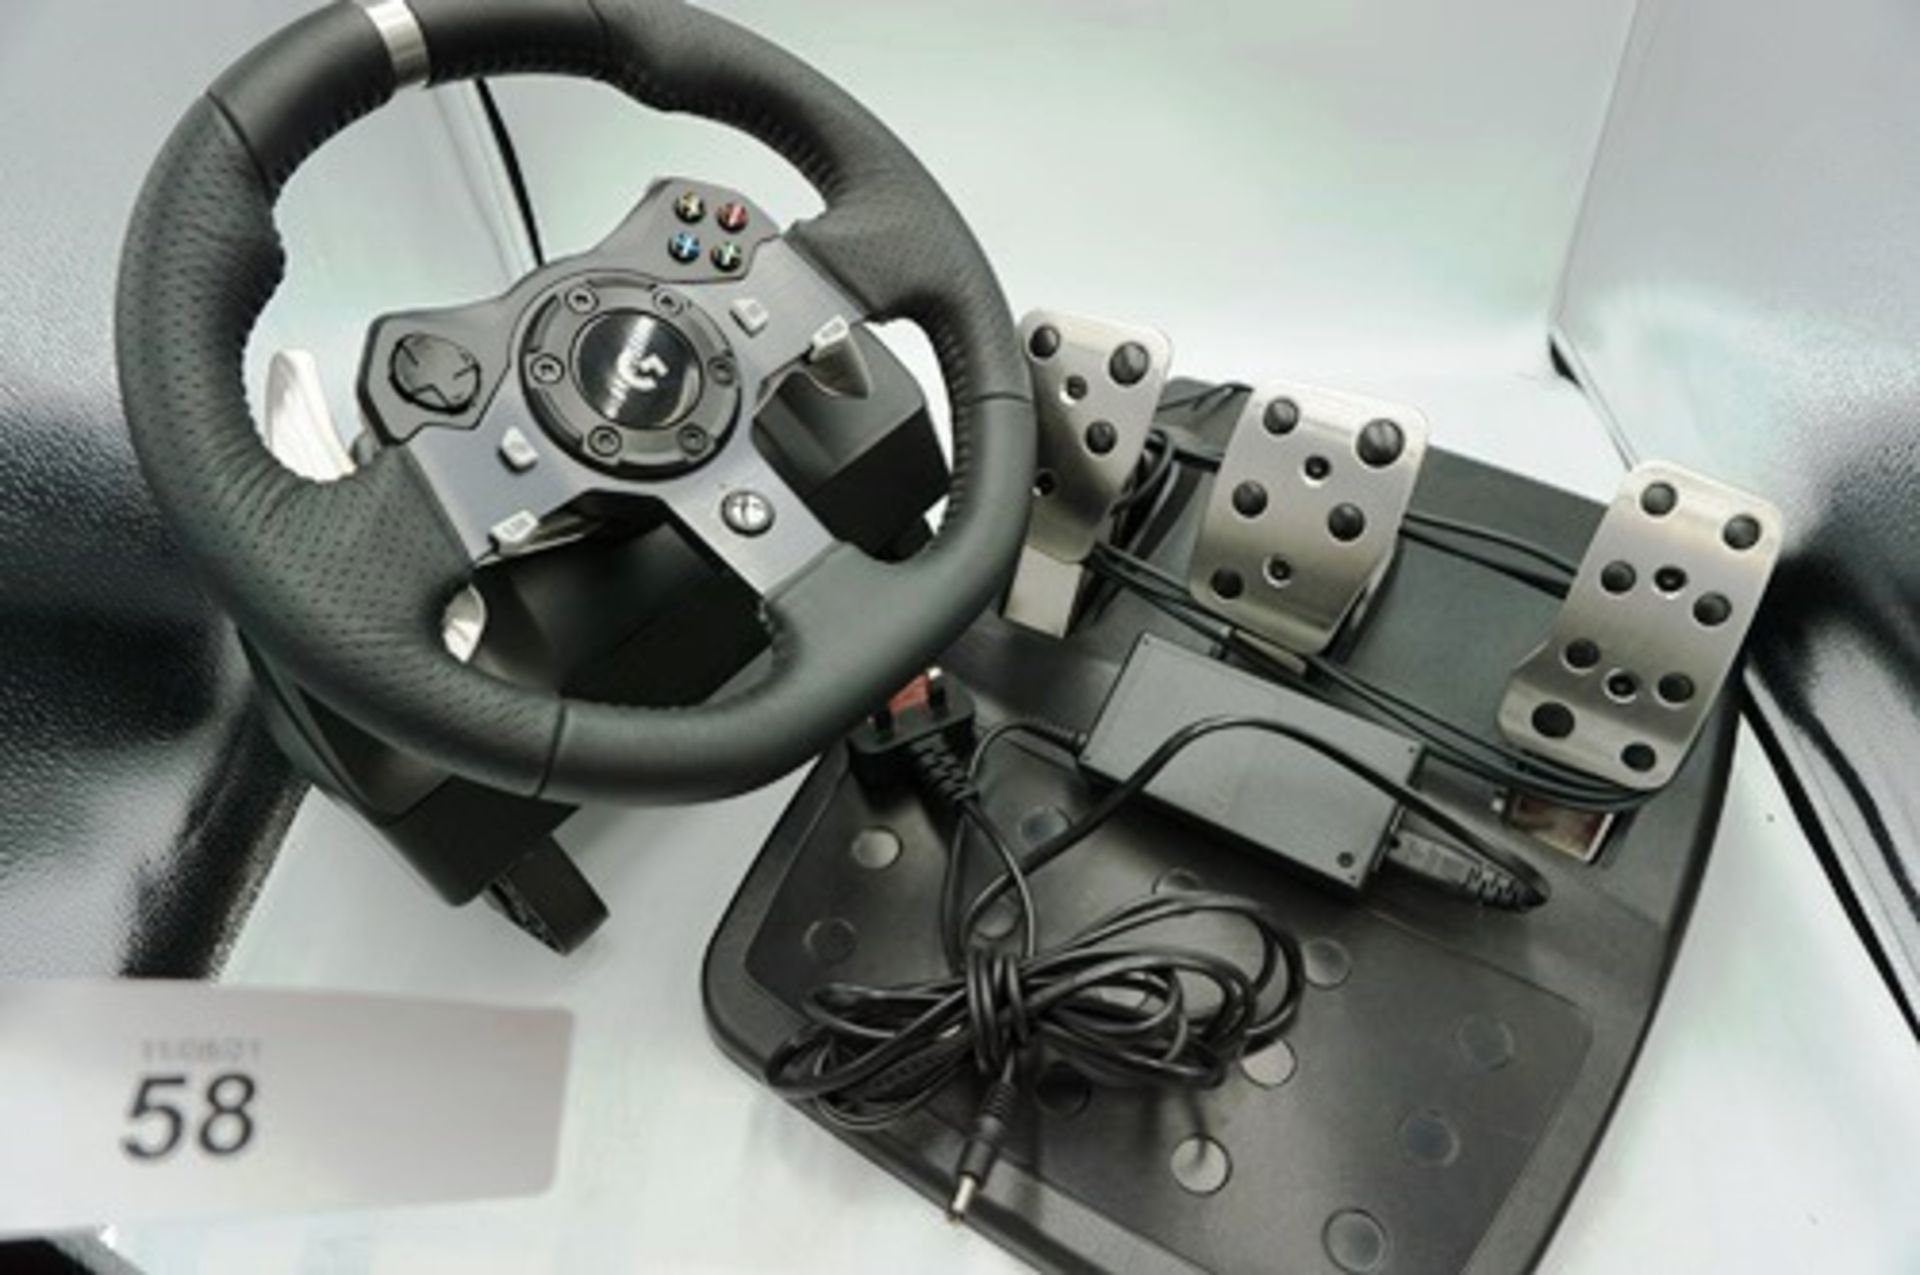 1 x Logitech G920 Force Feedback steering wheel for Xbox One, model W-U0004, powers on, not fully